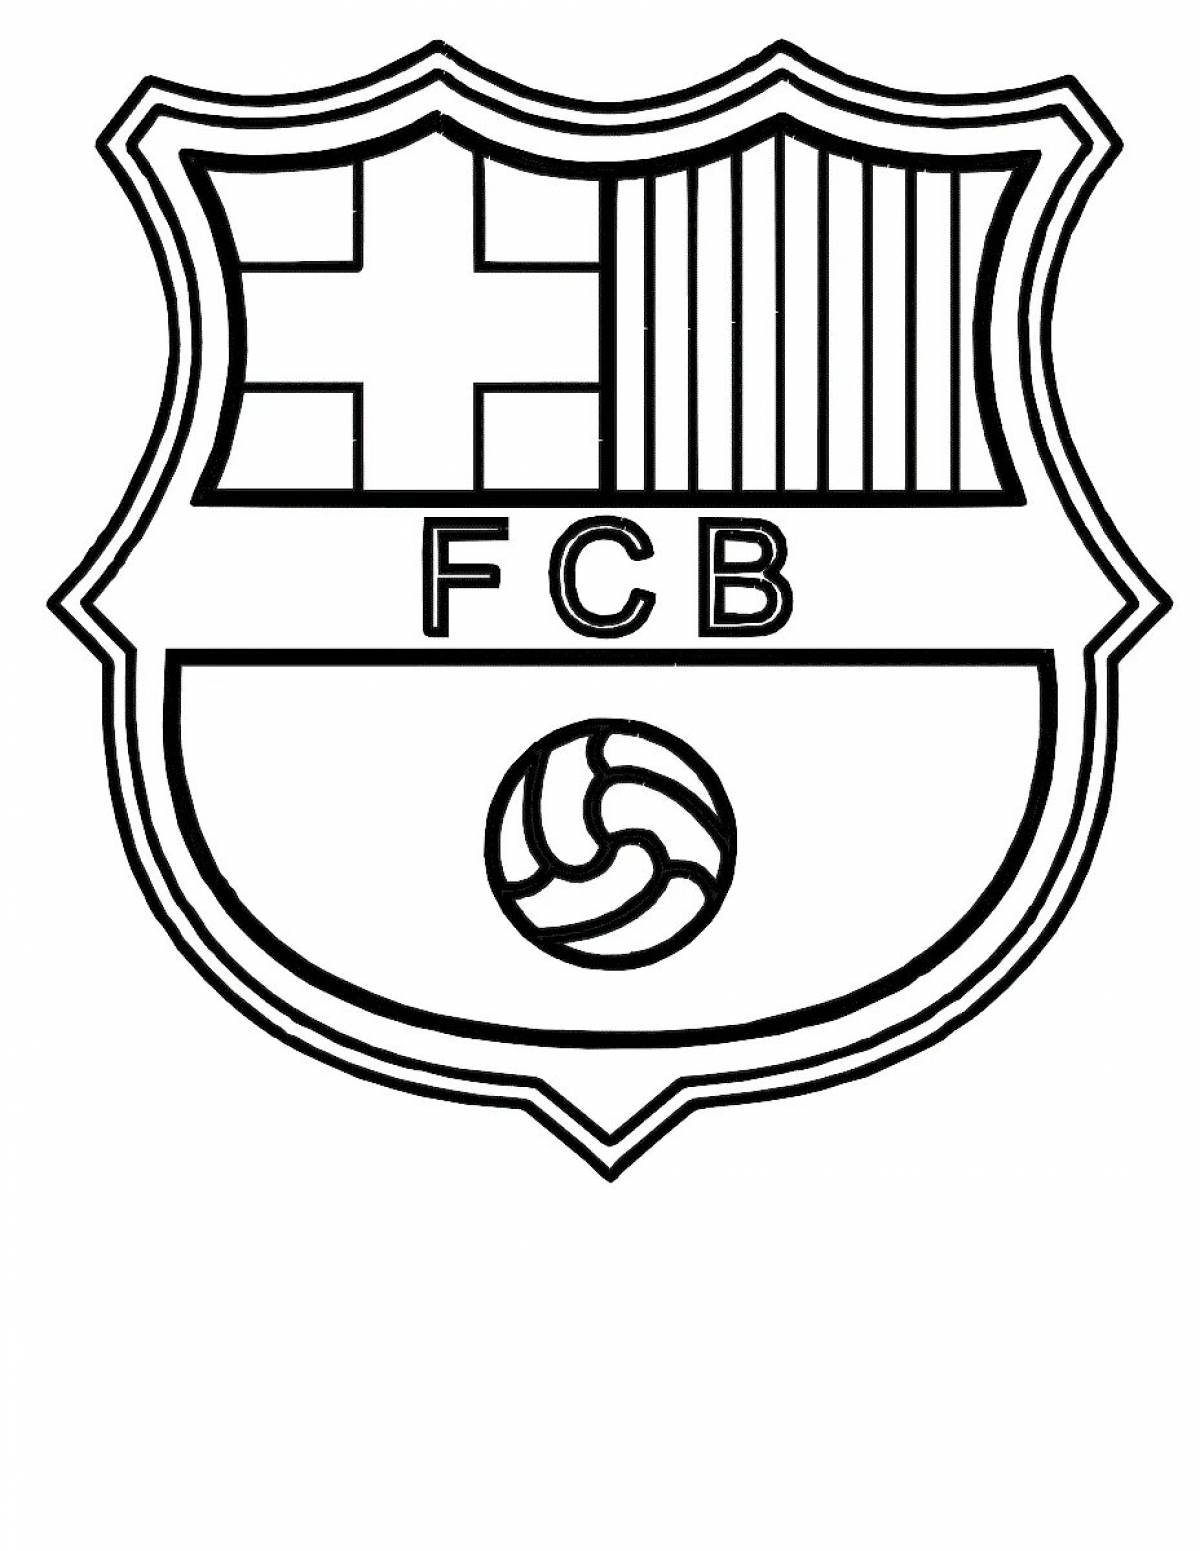 Barcelona logo #9